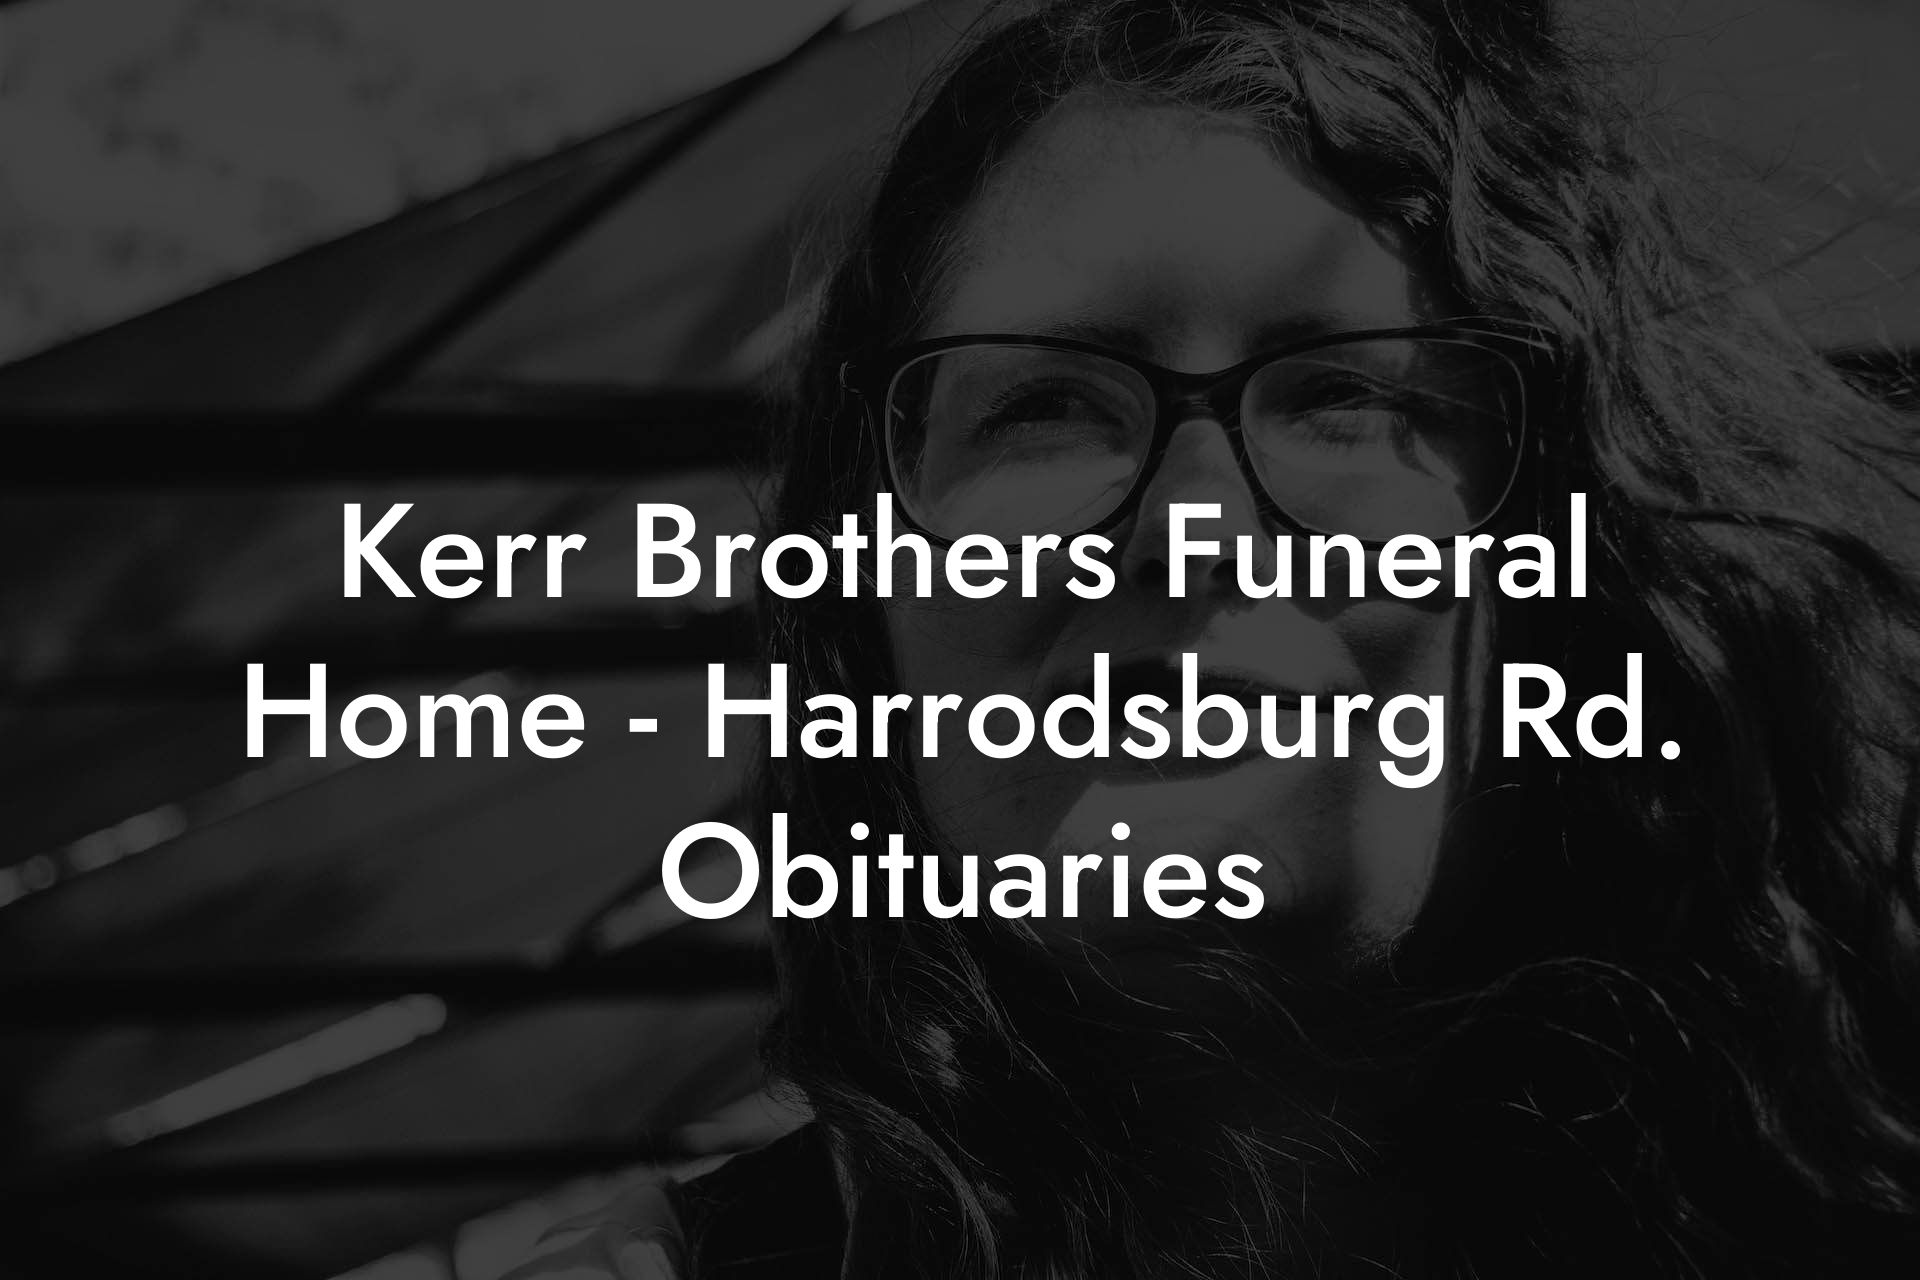 Kerr Brothers Funeral Home - Harrodsburg Rd. Obituaries